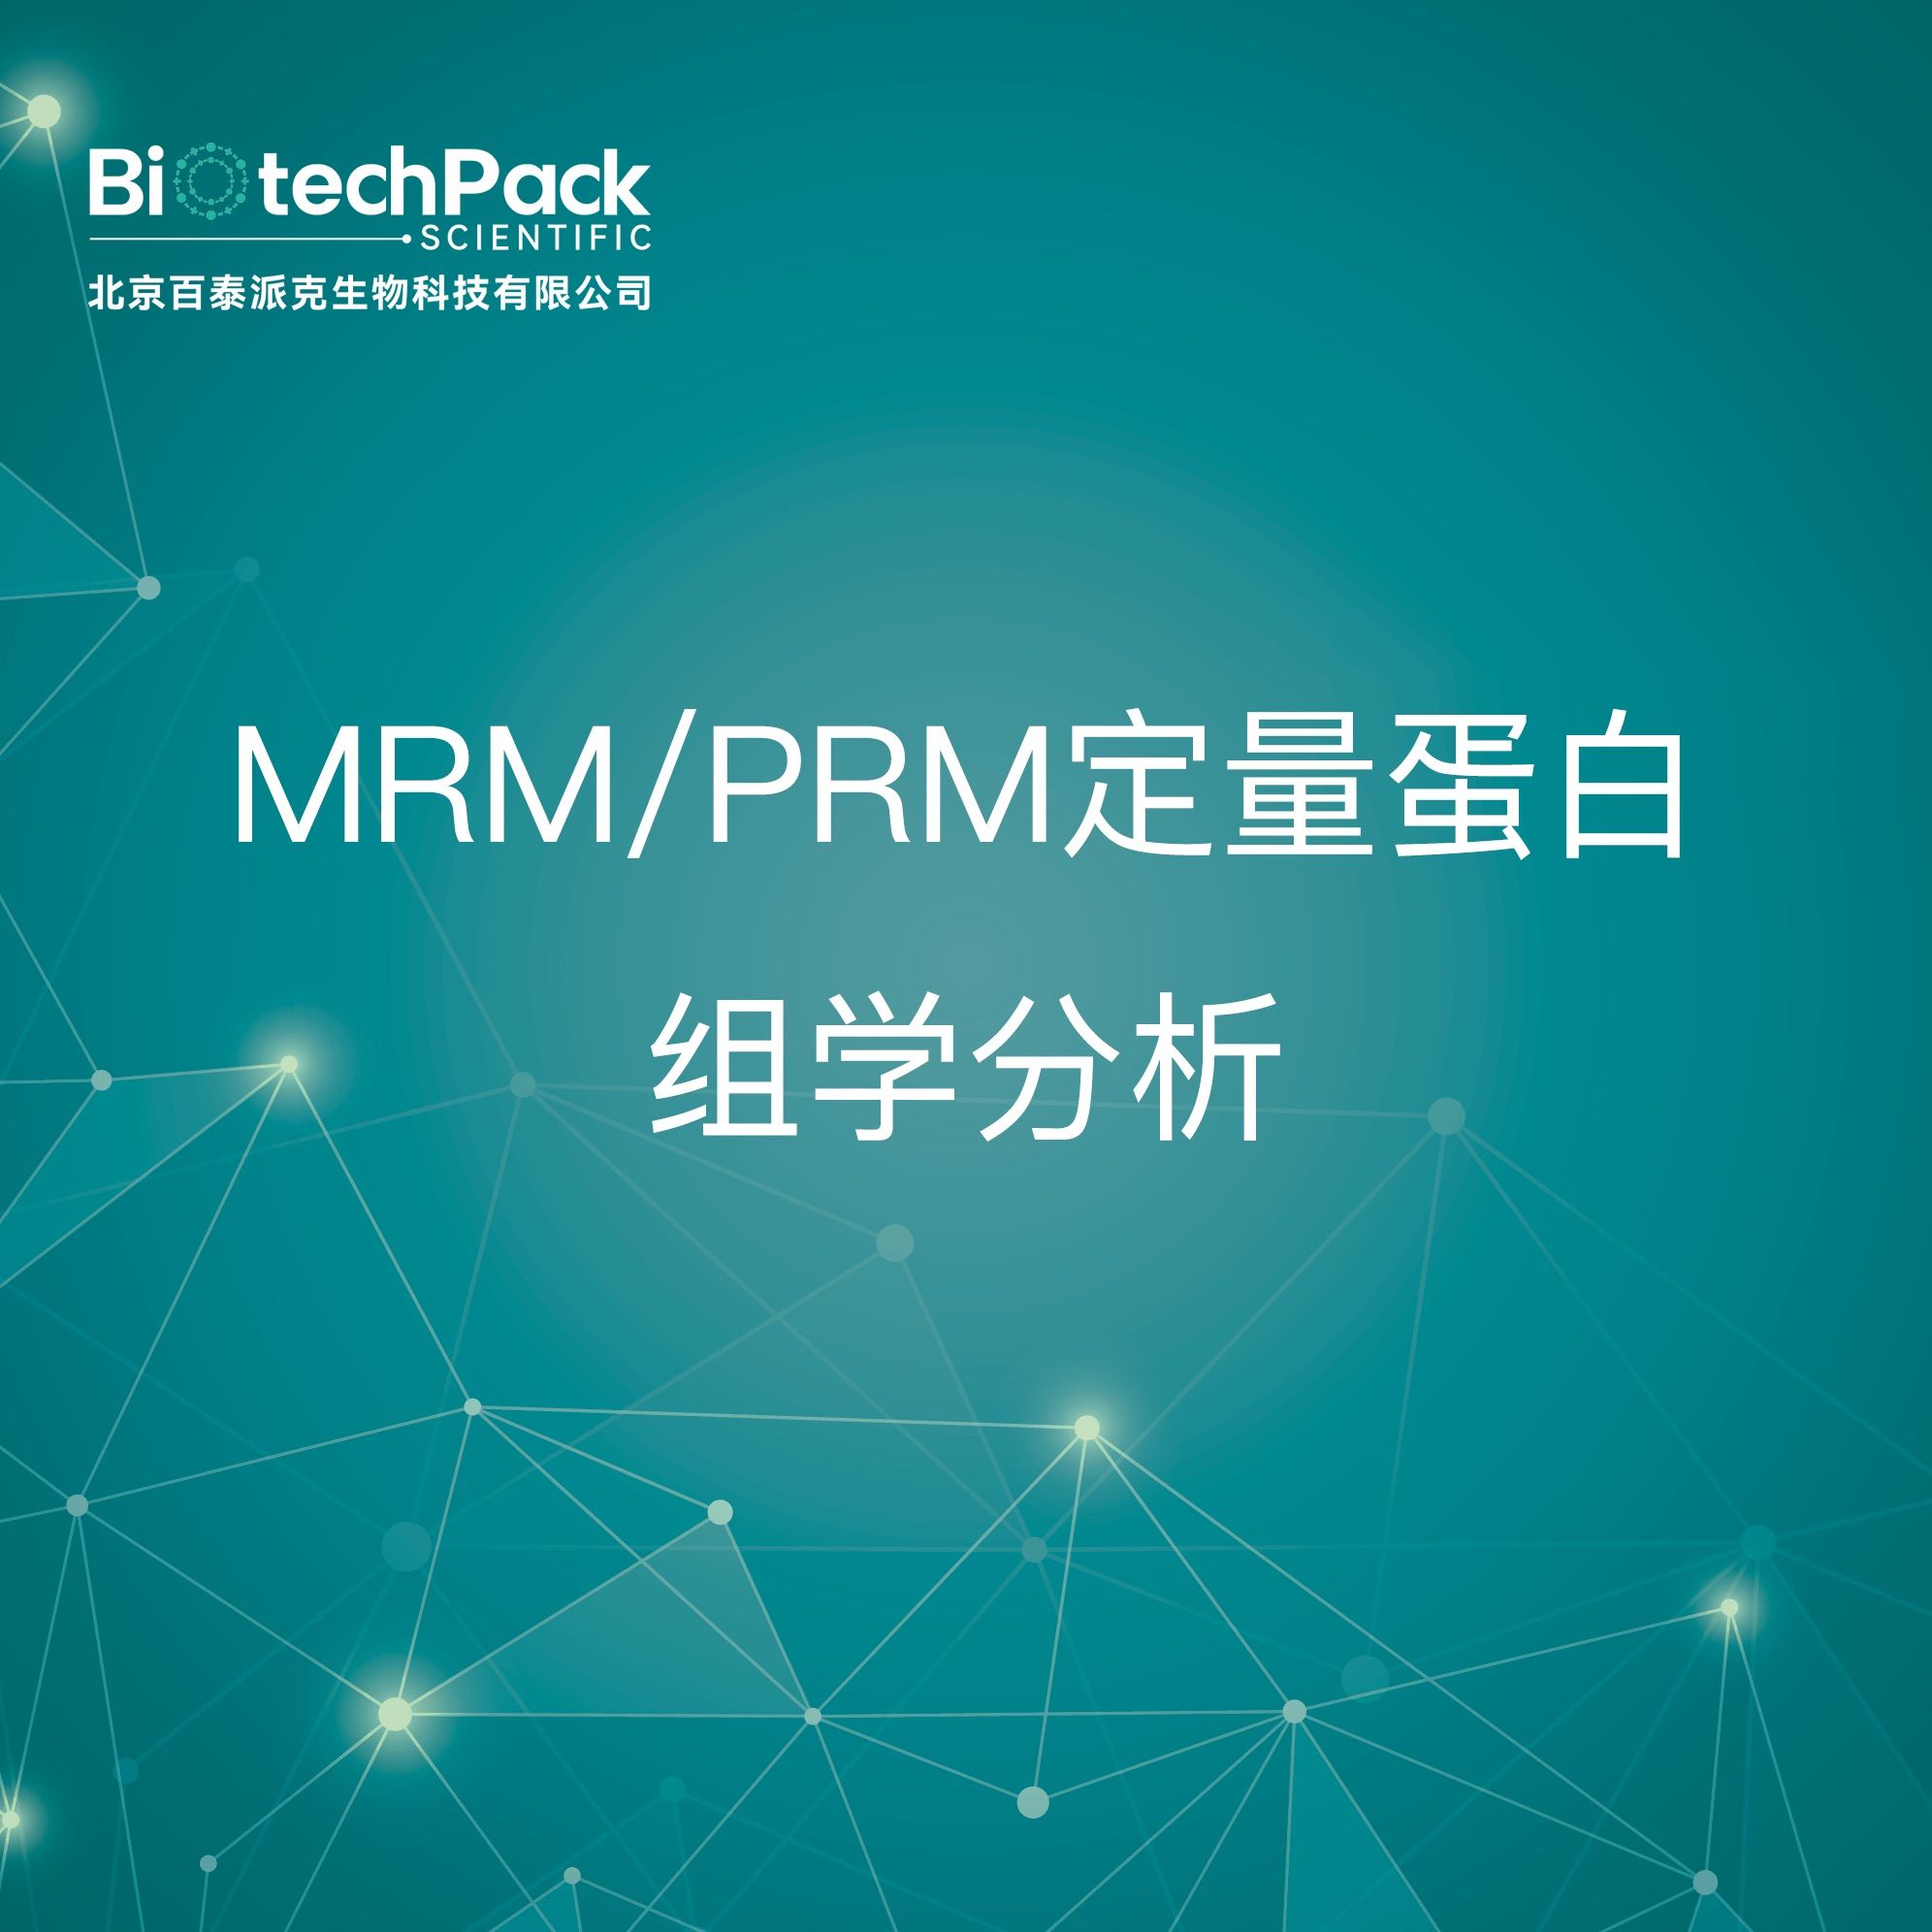 NMR分析-MRM/PRM定量蛋白组学分析-技术服务